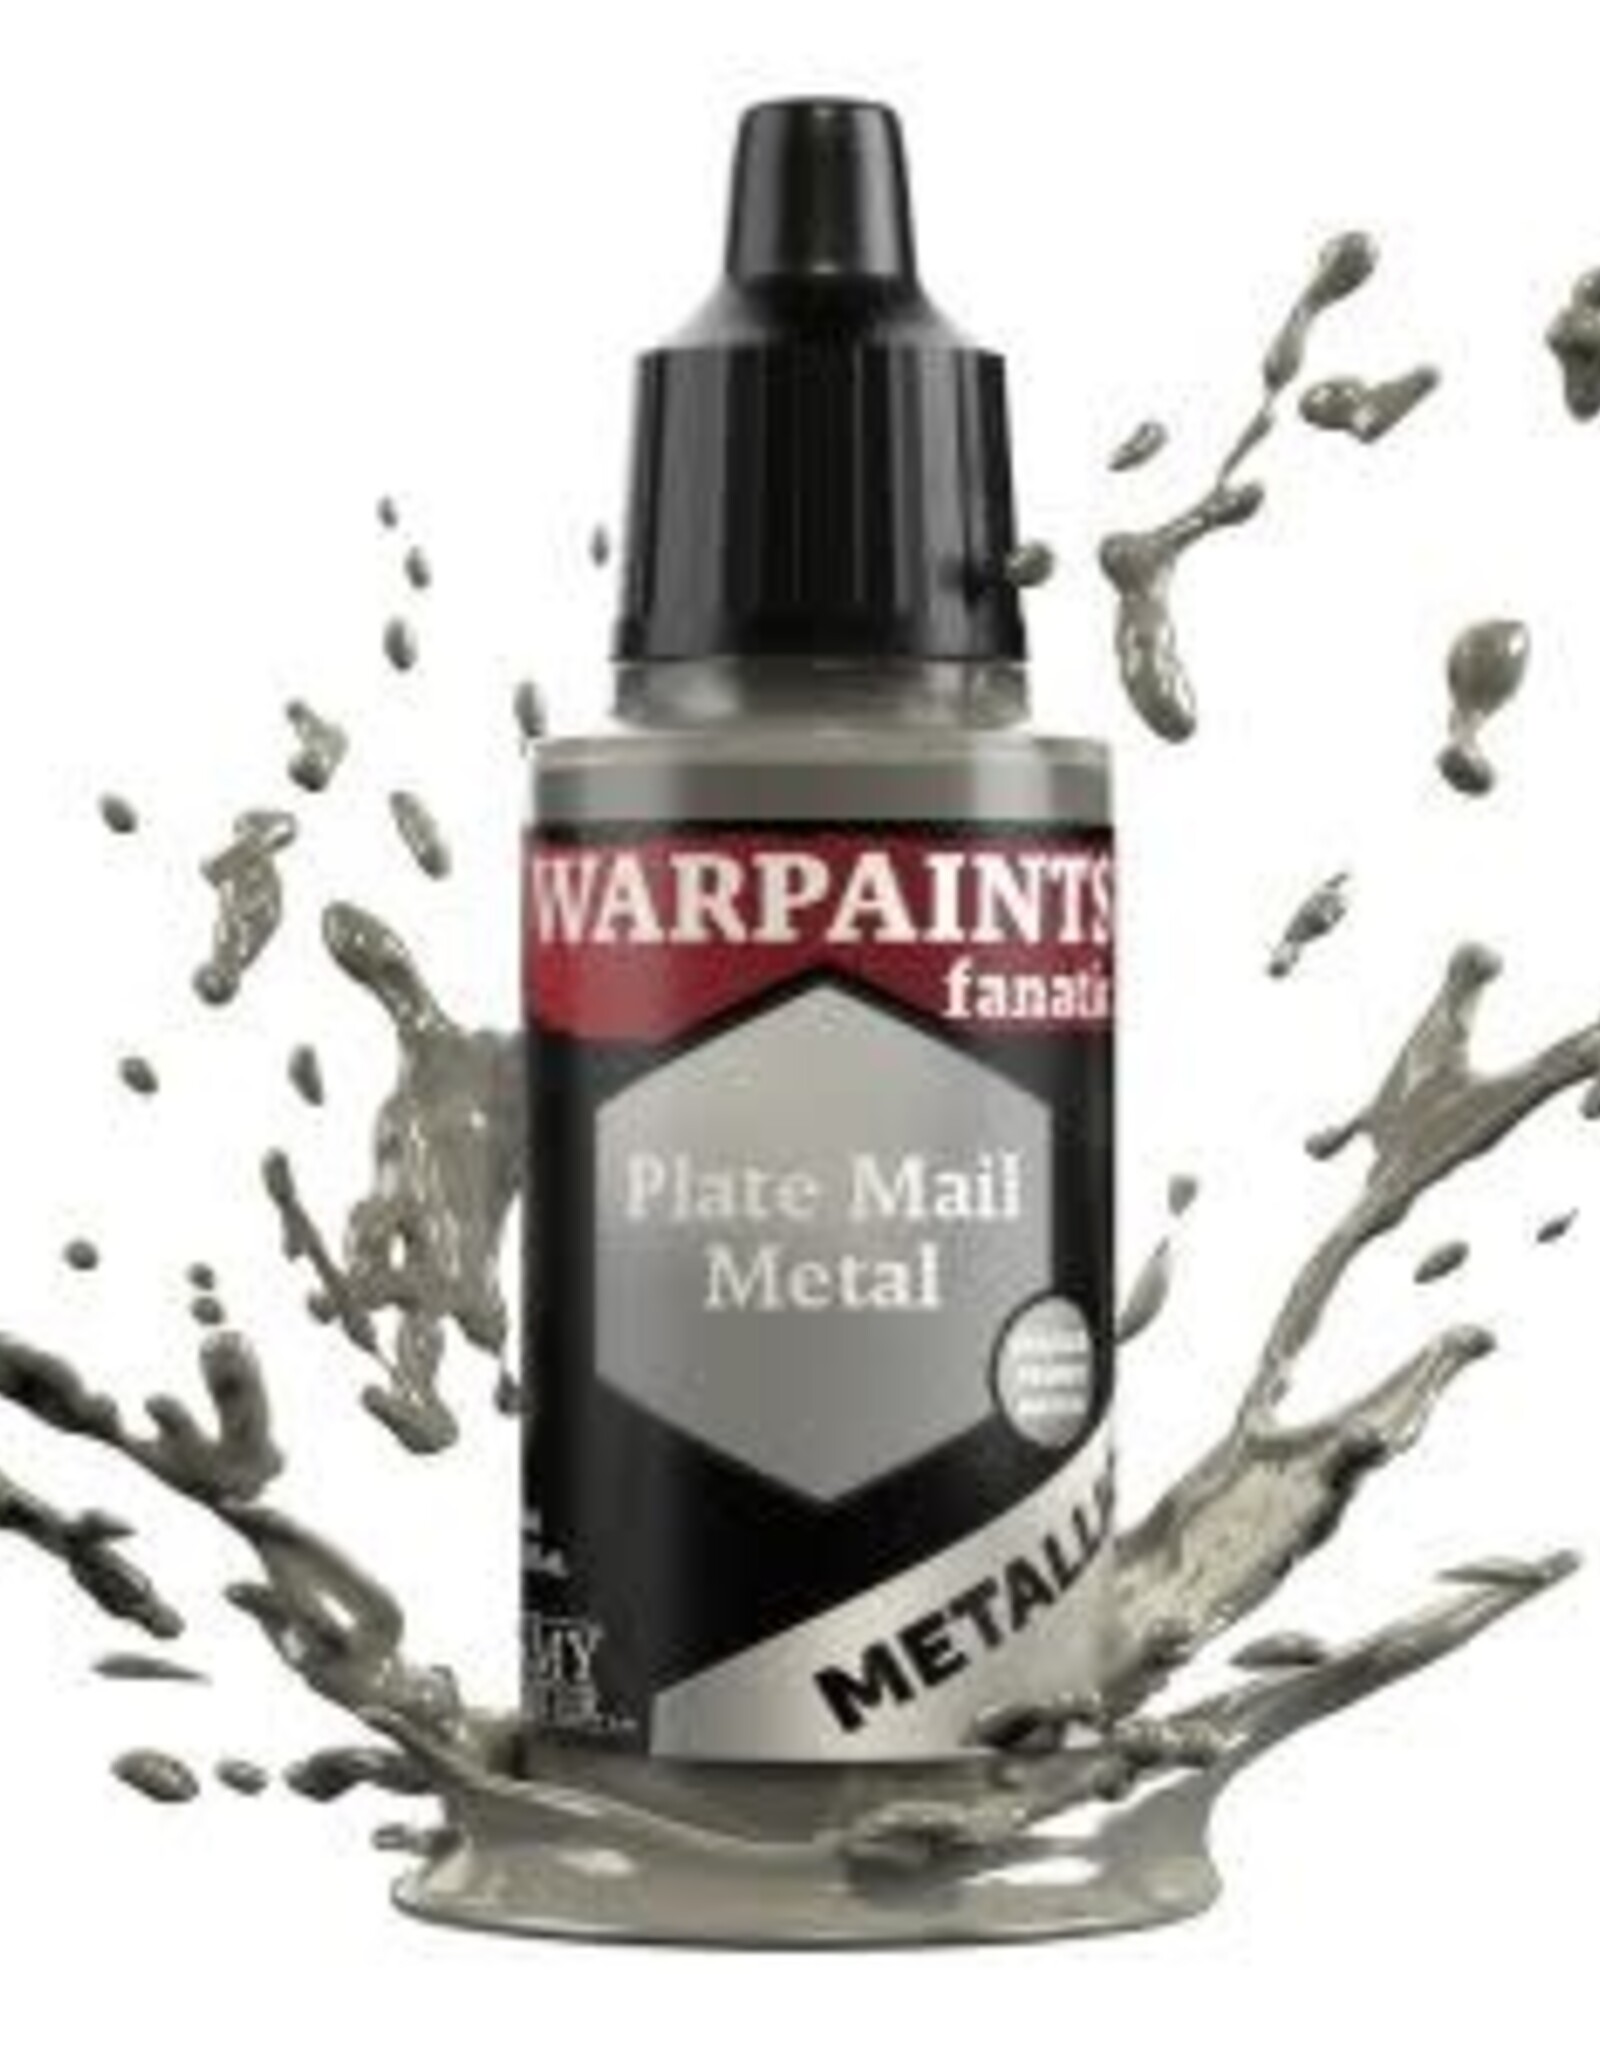 Warpaints Fanatic Metallic: Plate Mail Metal